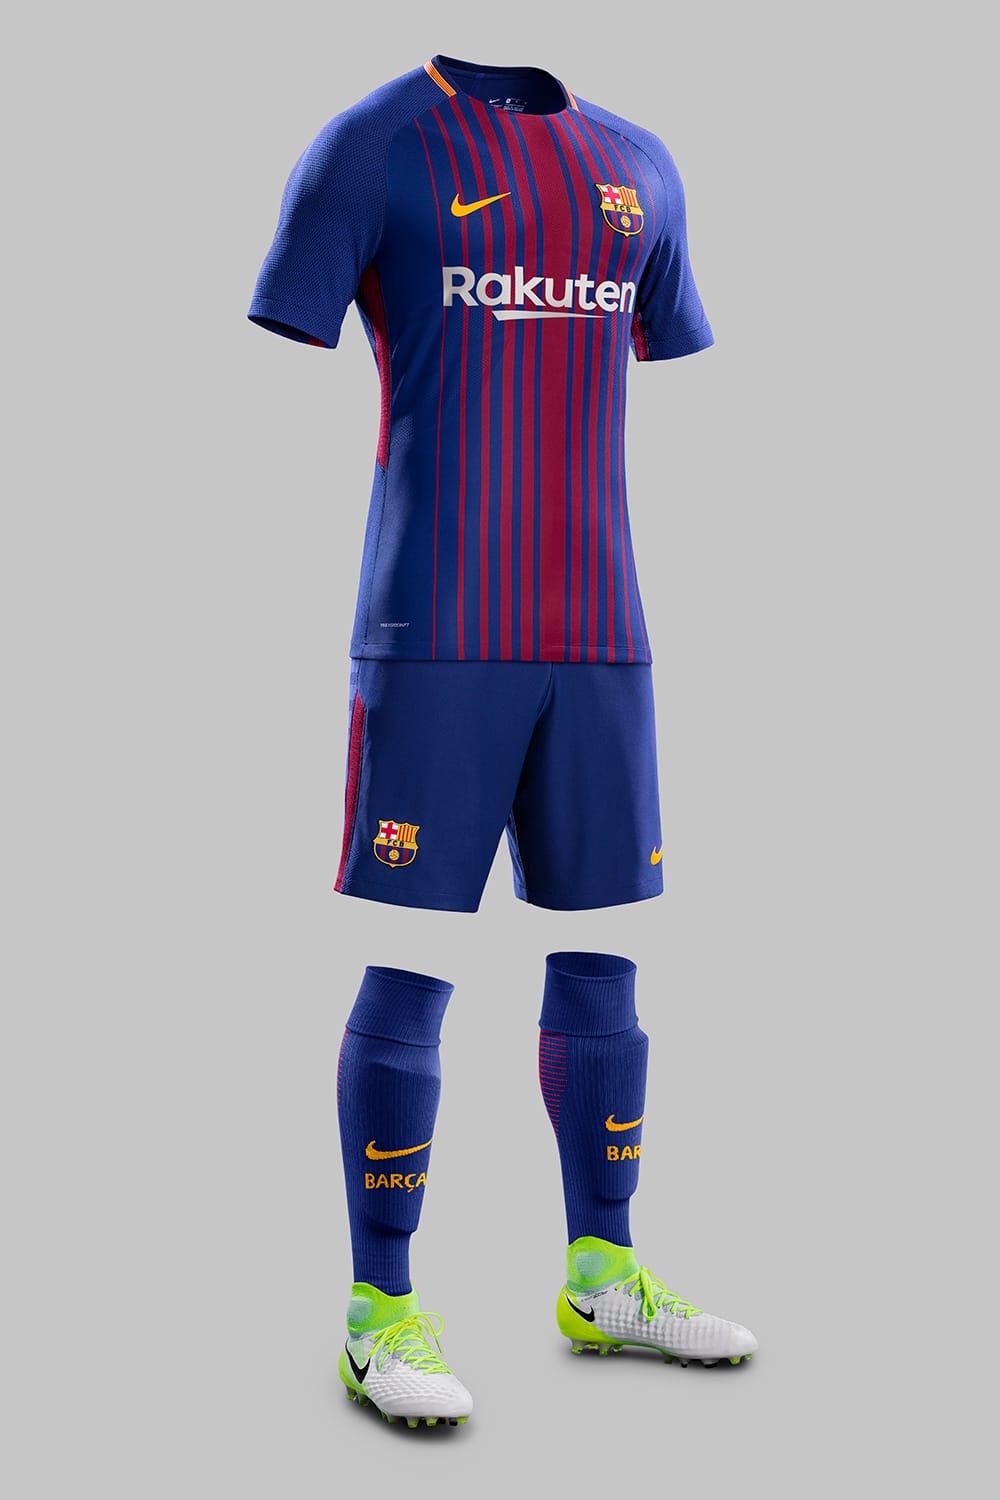 barcelona kit 2018